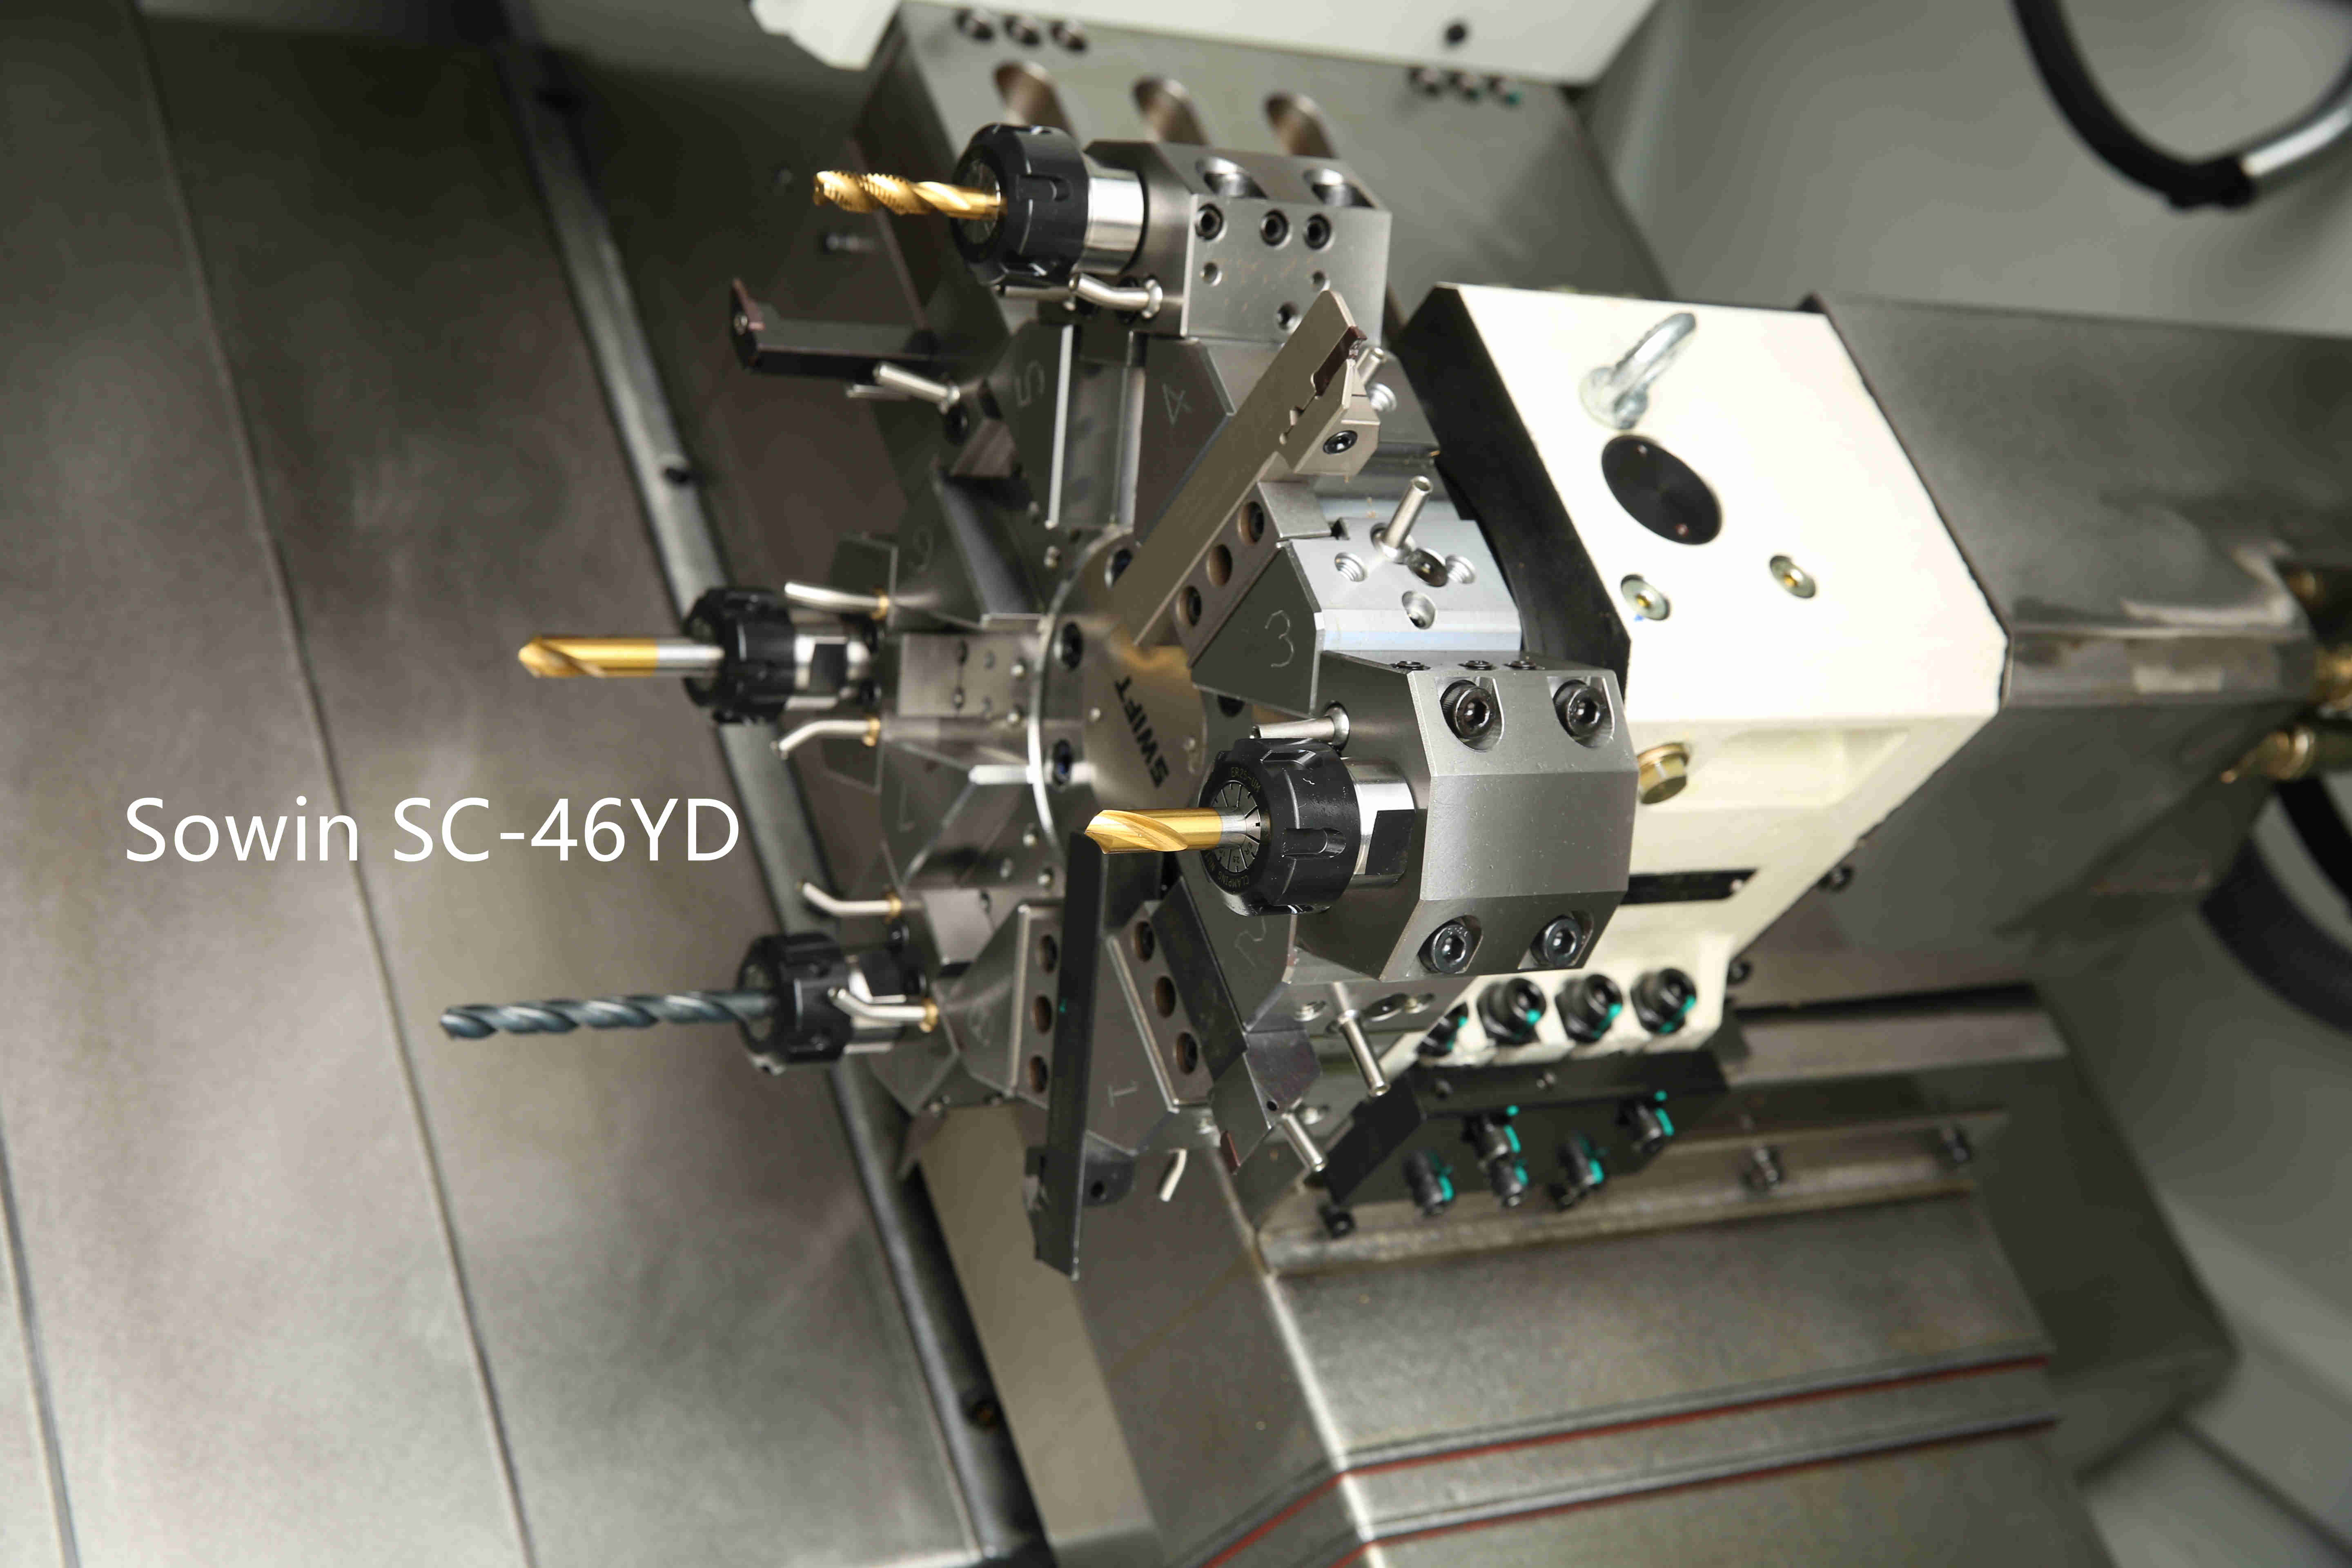 Model SC-46YD Slant bed CNC turn mill lathe